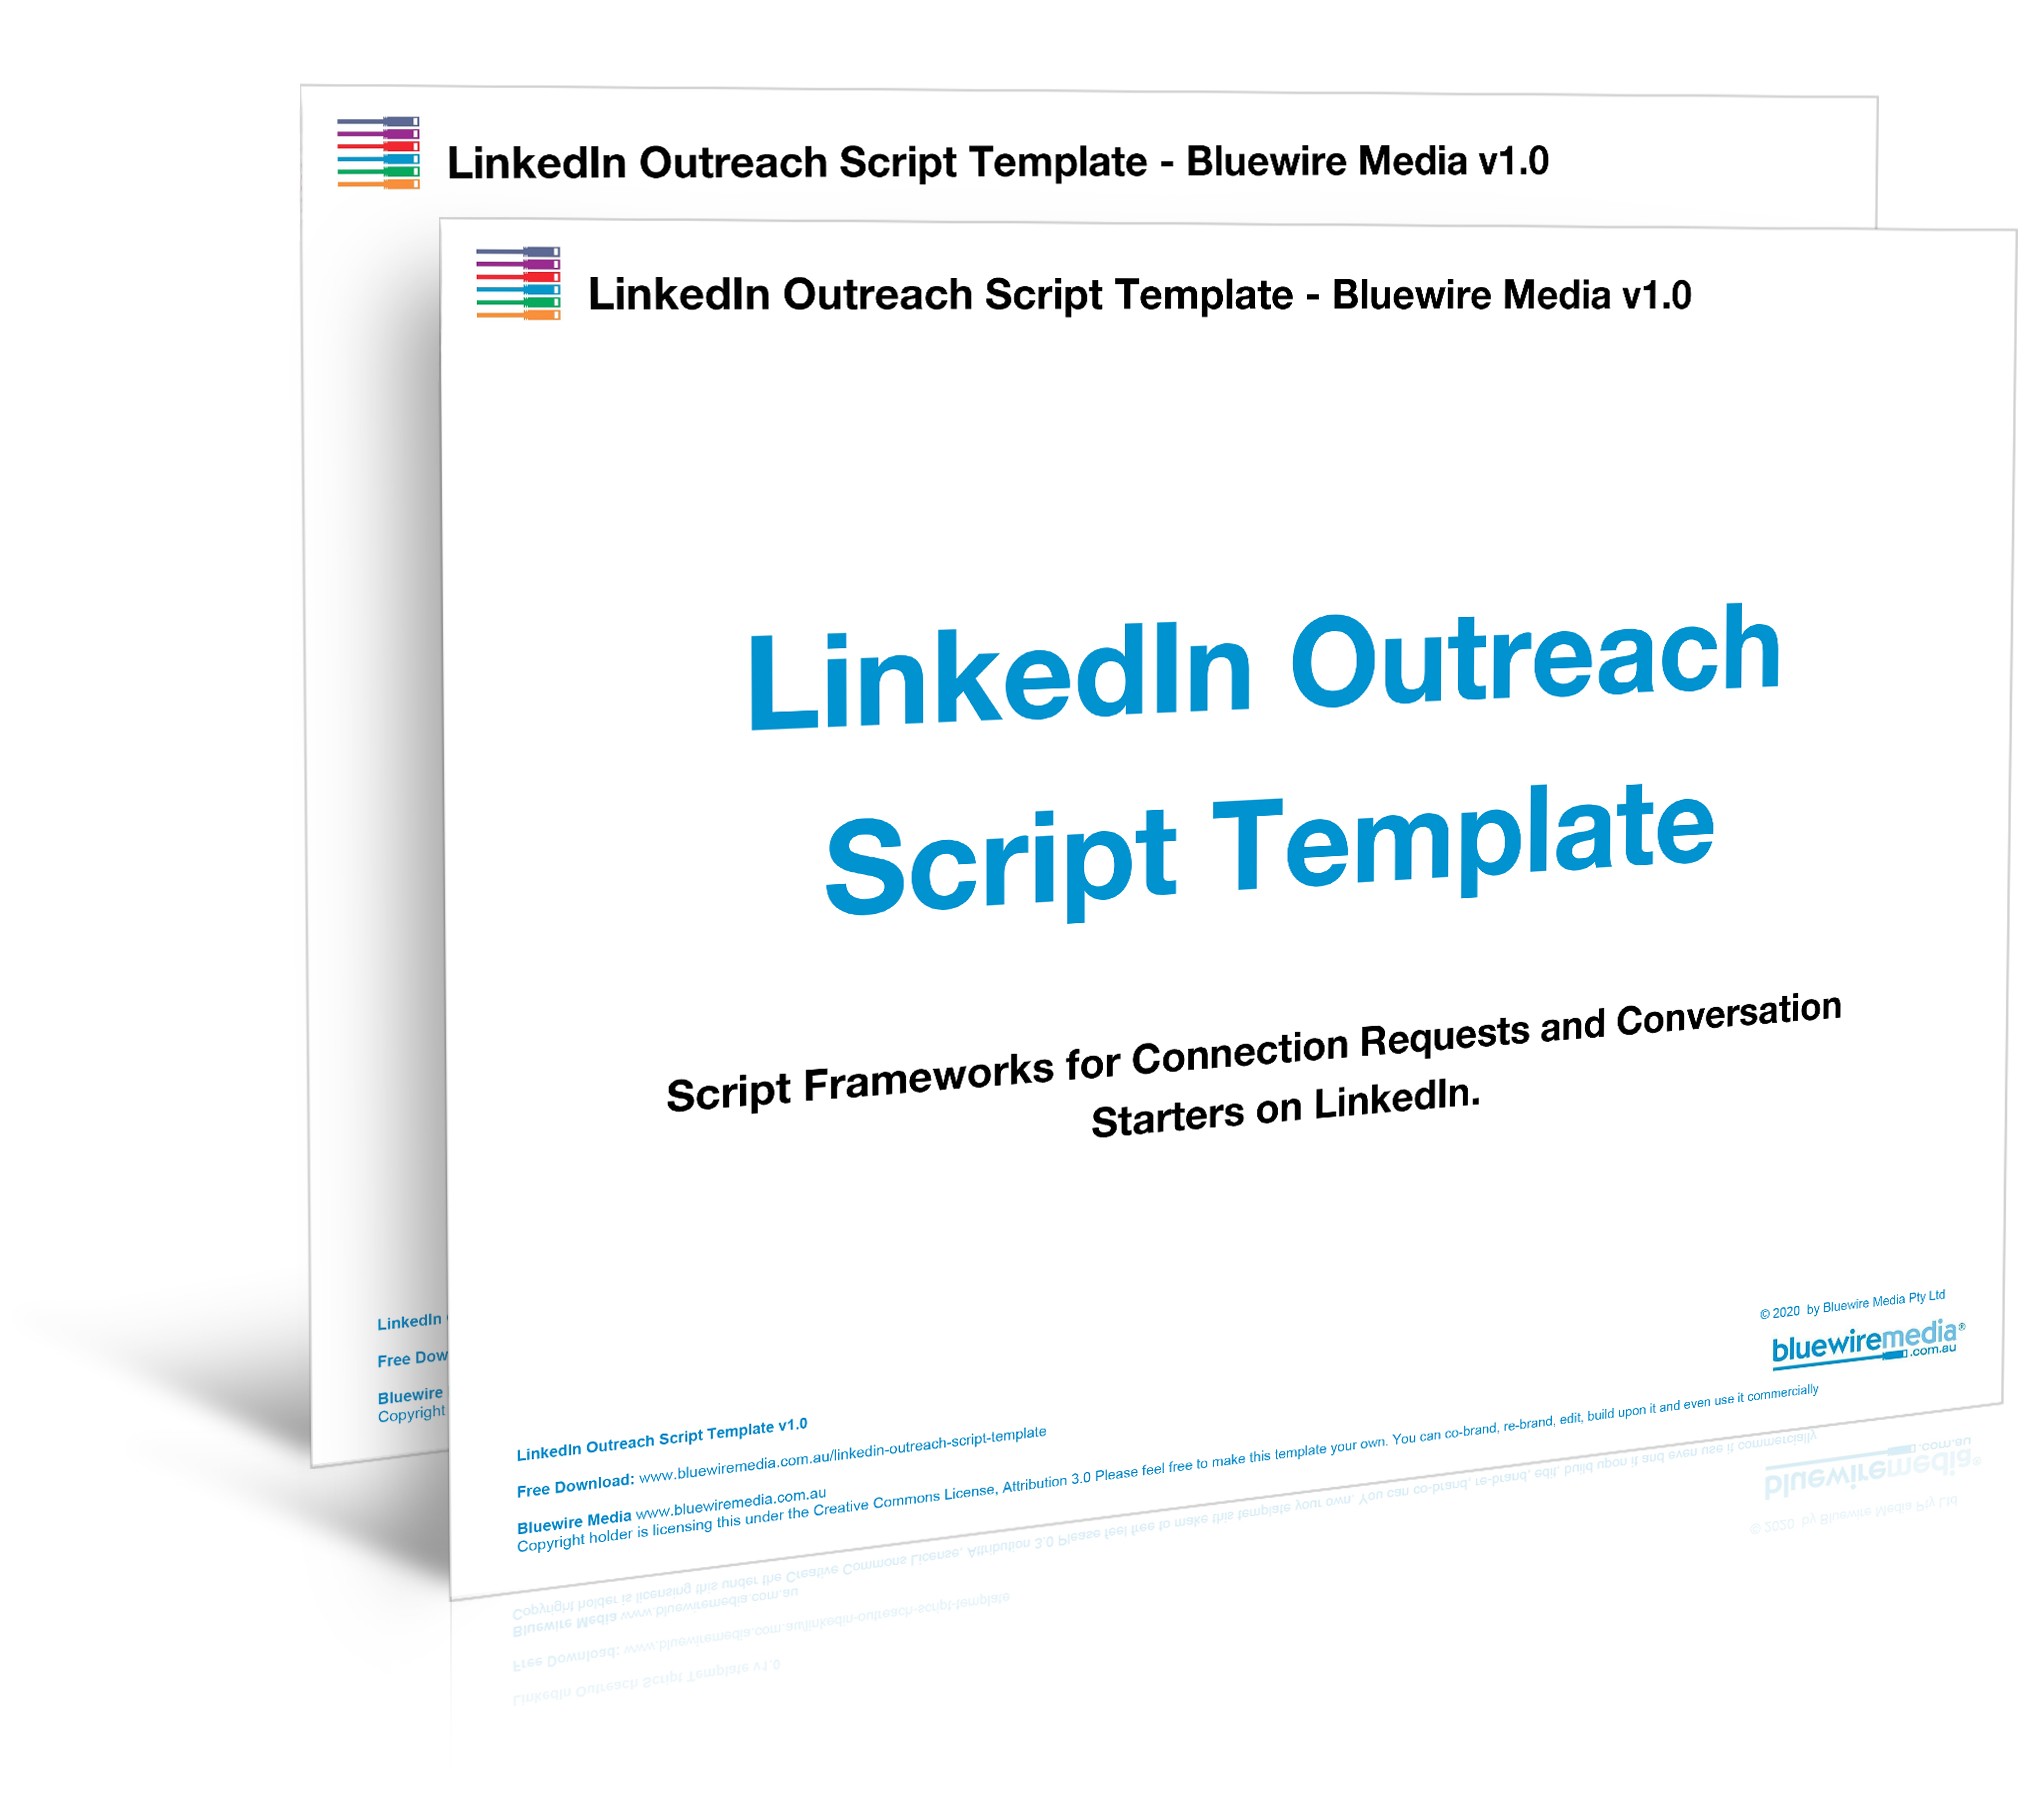 LinkedIn Outreach Script Template